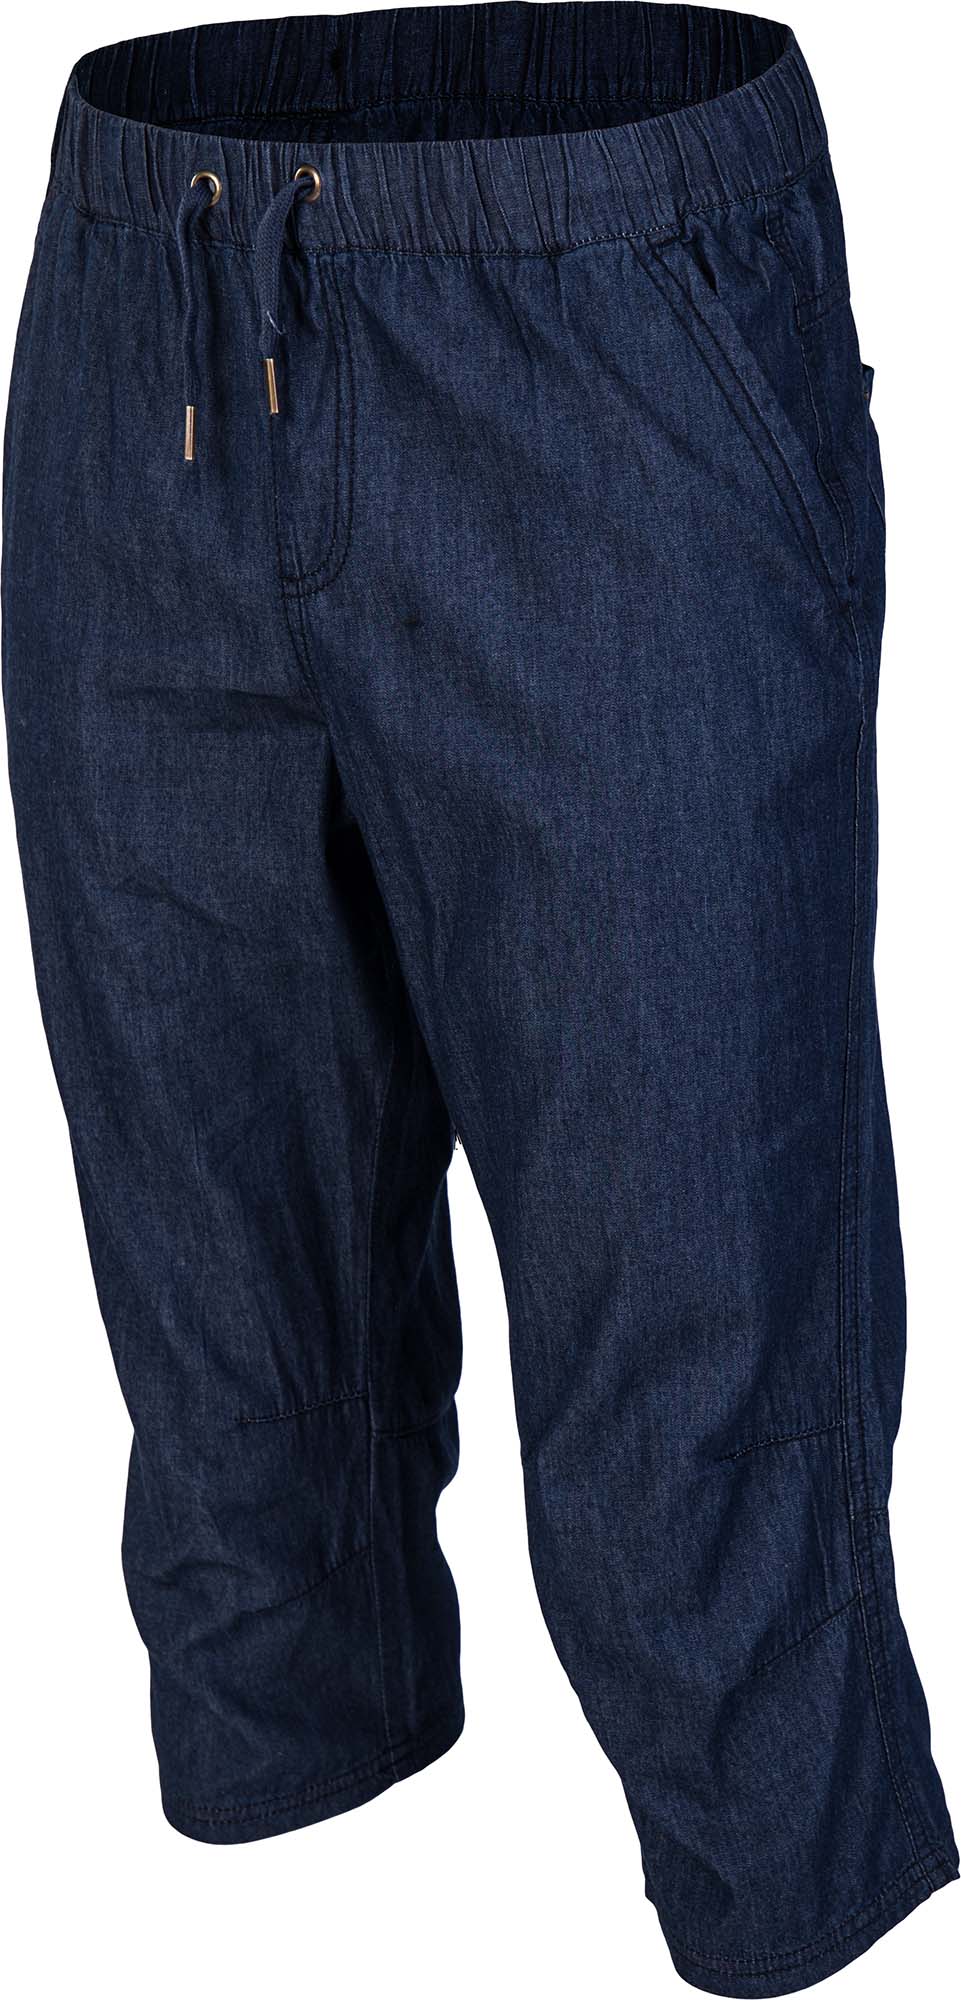 Men’s 3/4 length trousers